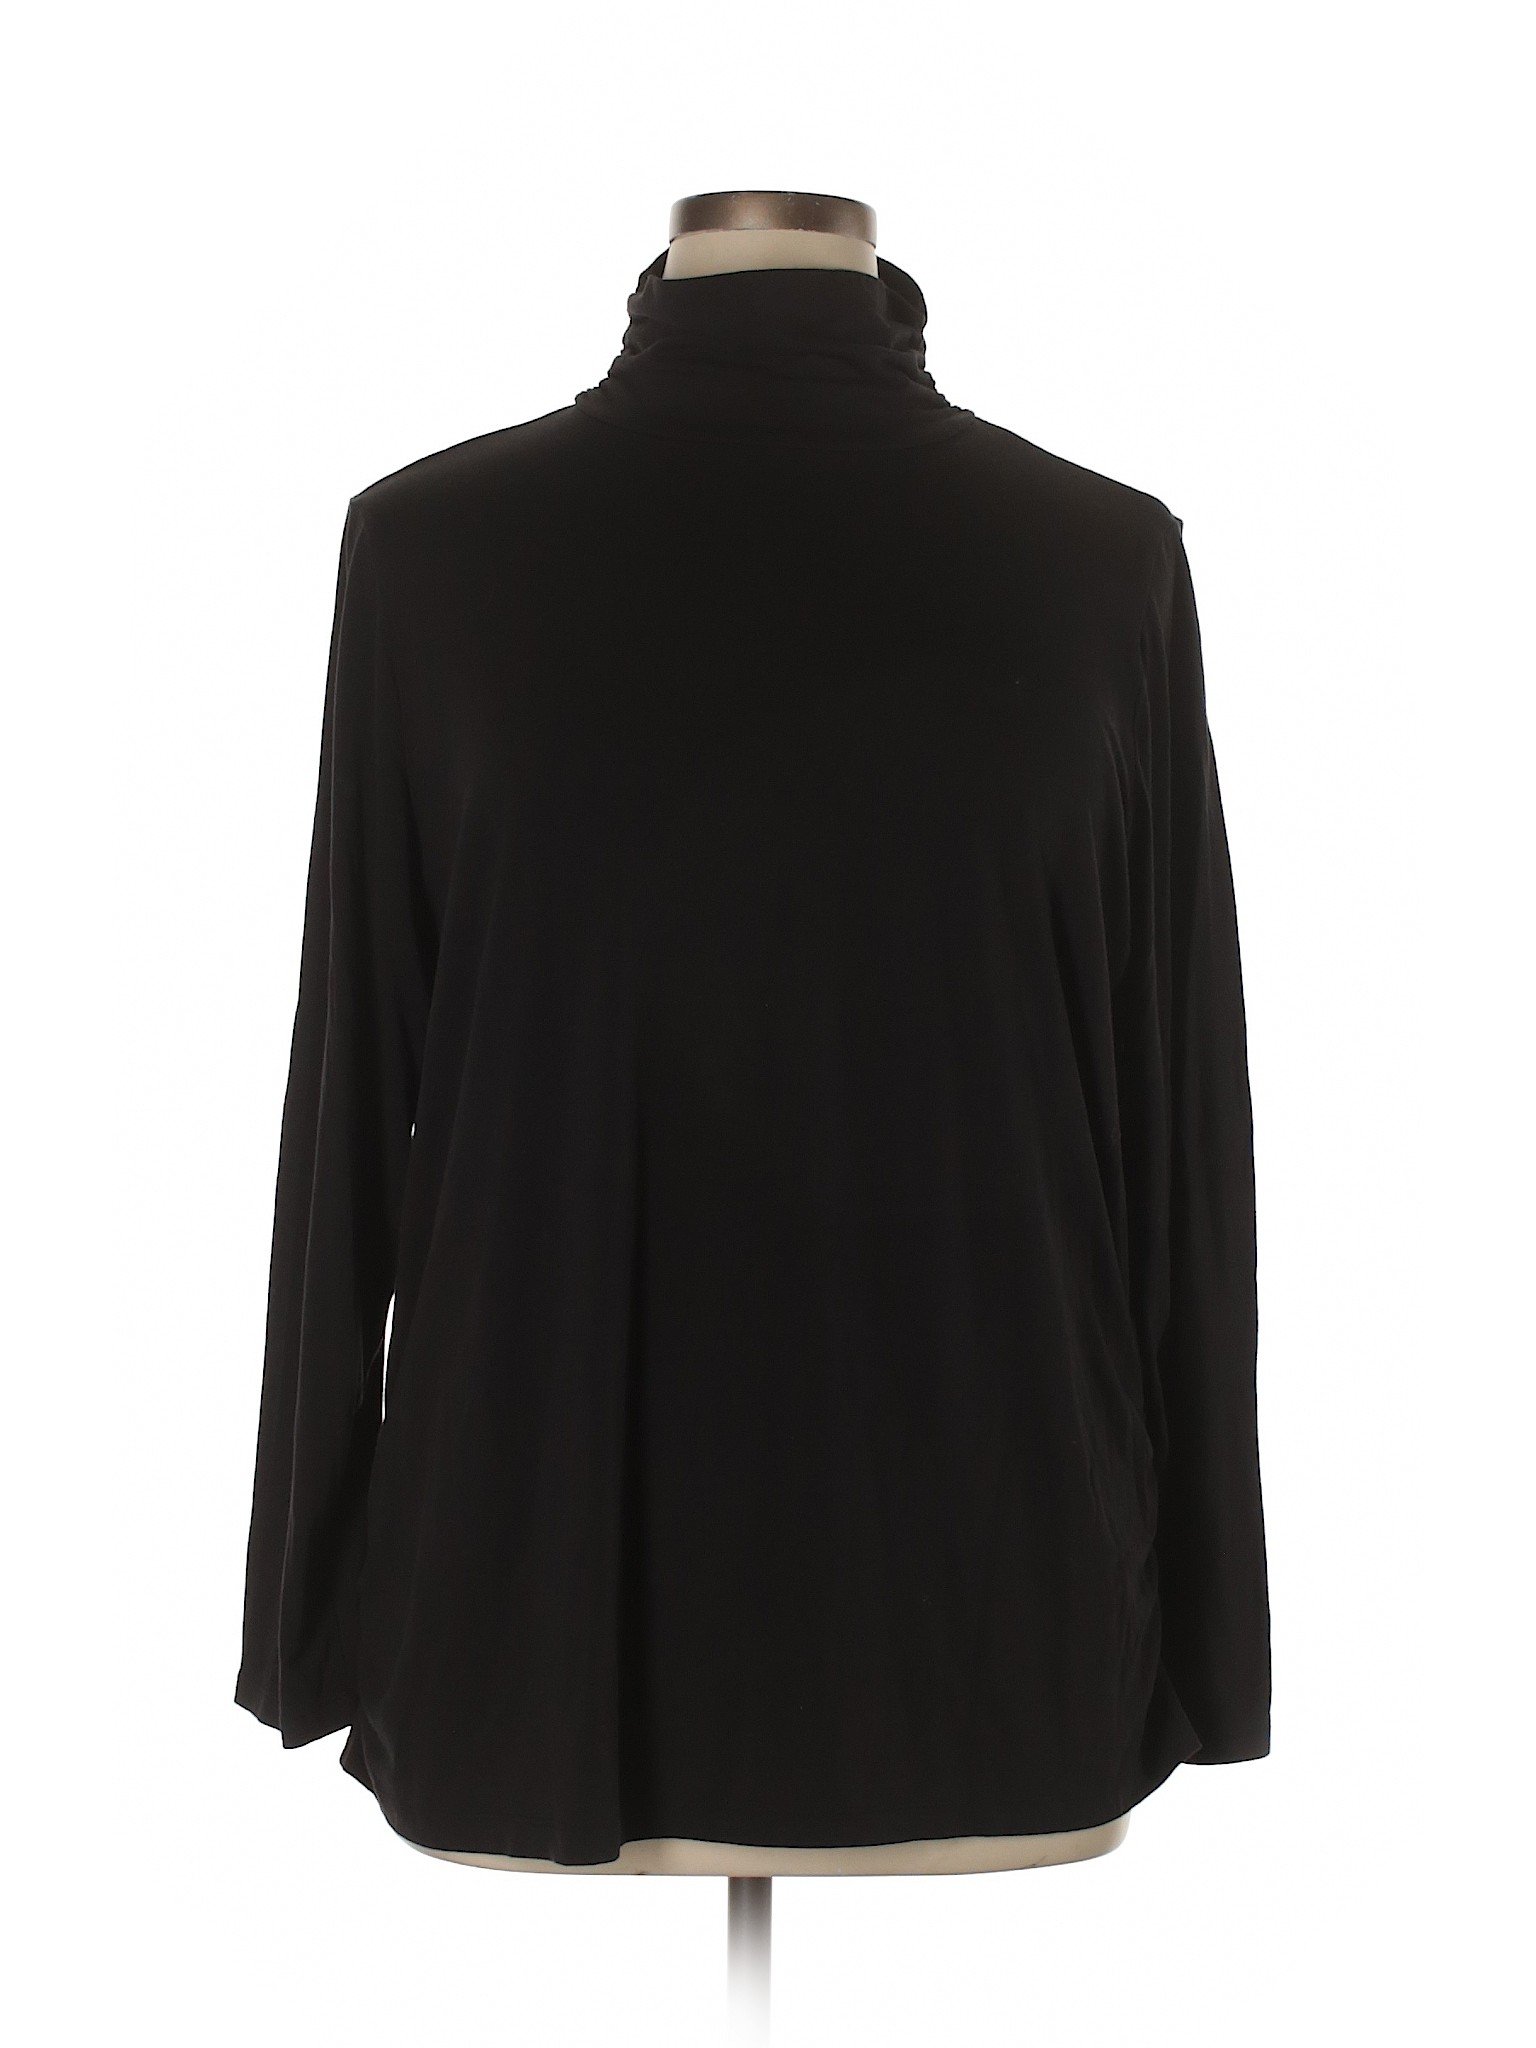 Cj Banks Solid Black Long Sleeve T-Shirt Size 1X (Plus) - 77% off | thredUP